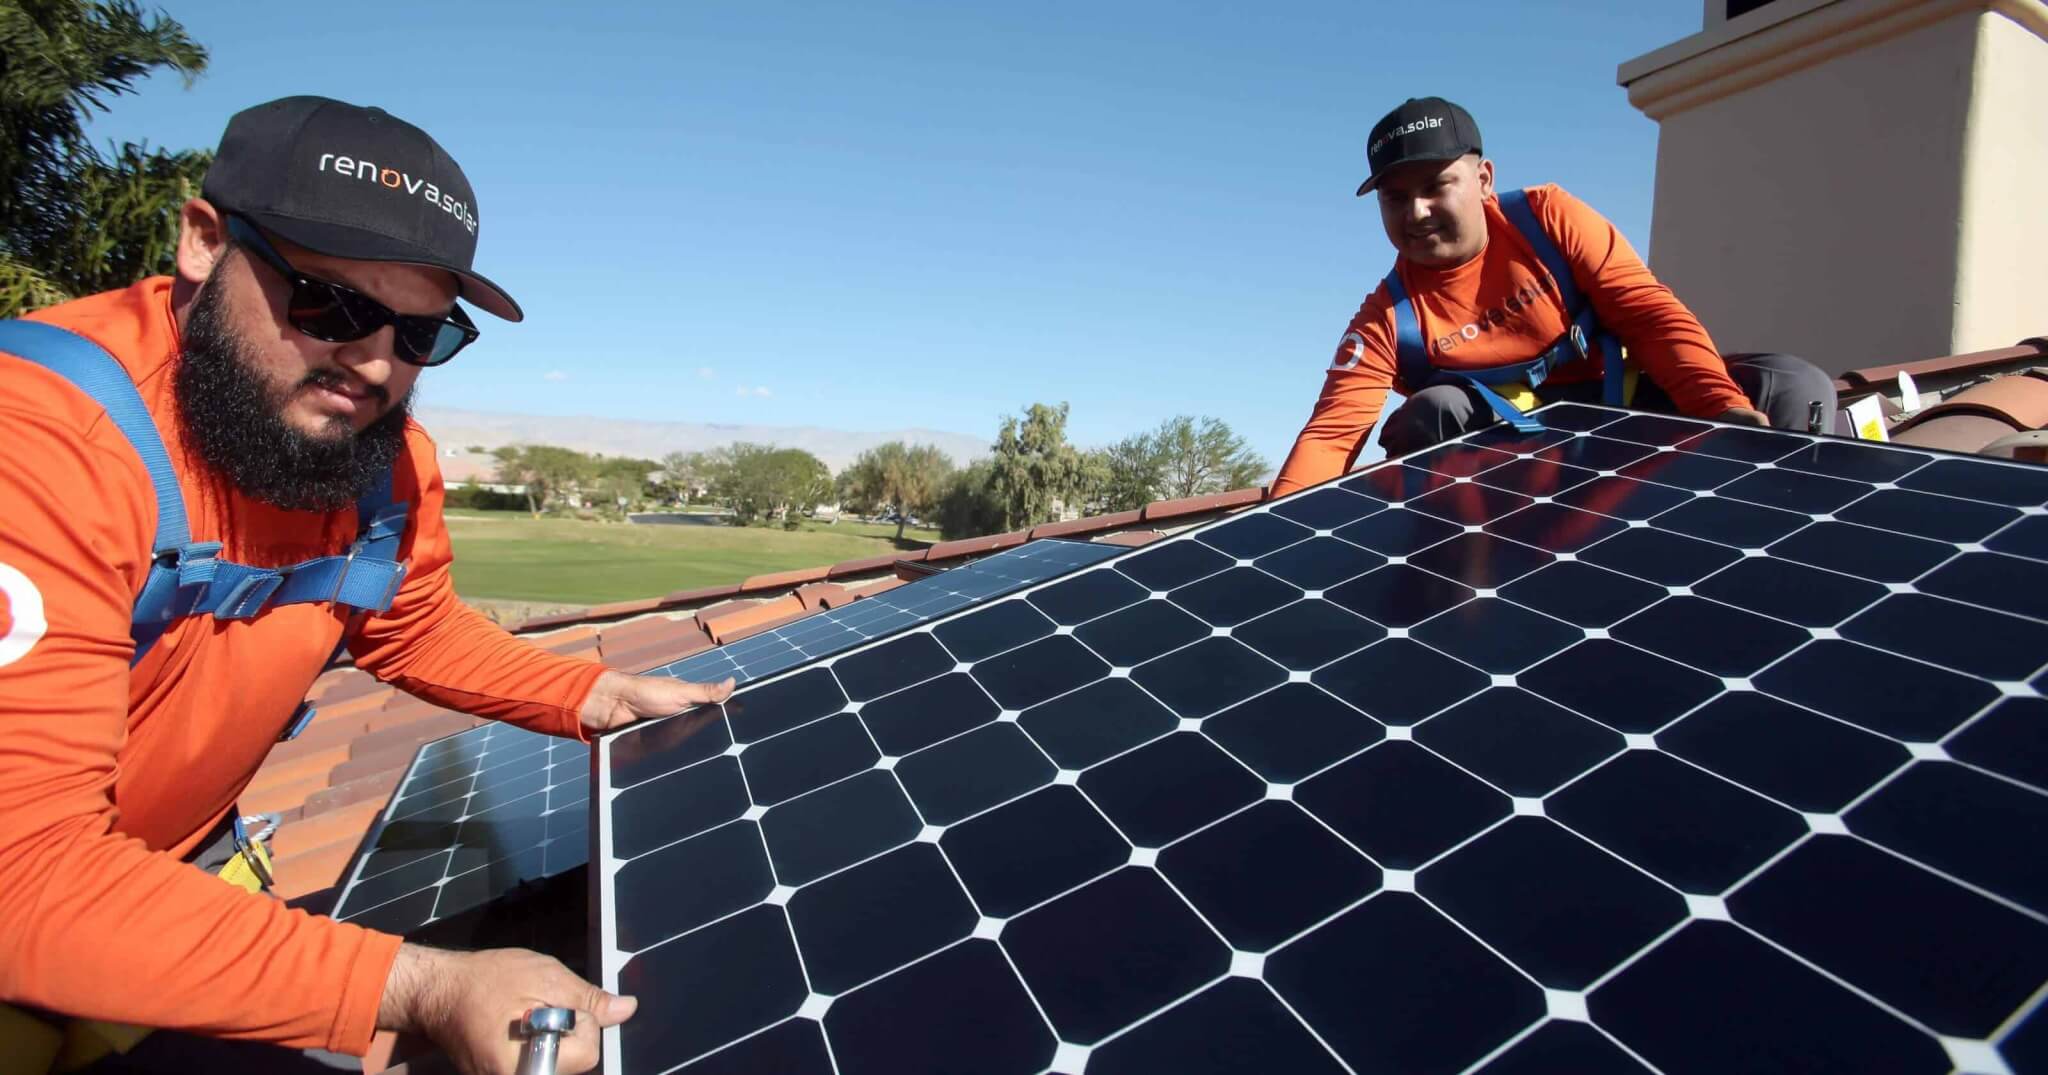 Running a Successful Local Solar Business with Vince Battaglia of Renova Solar